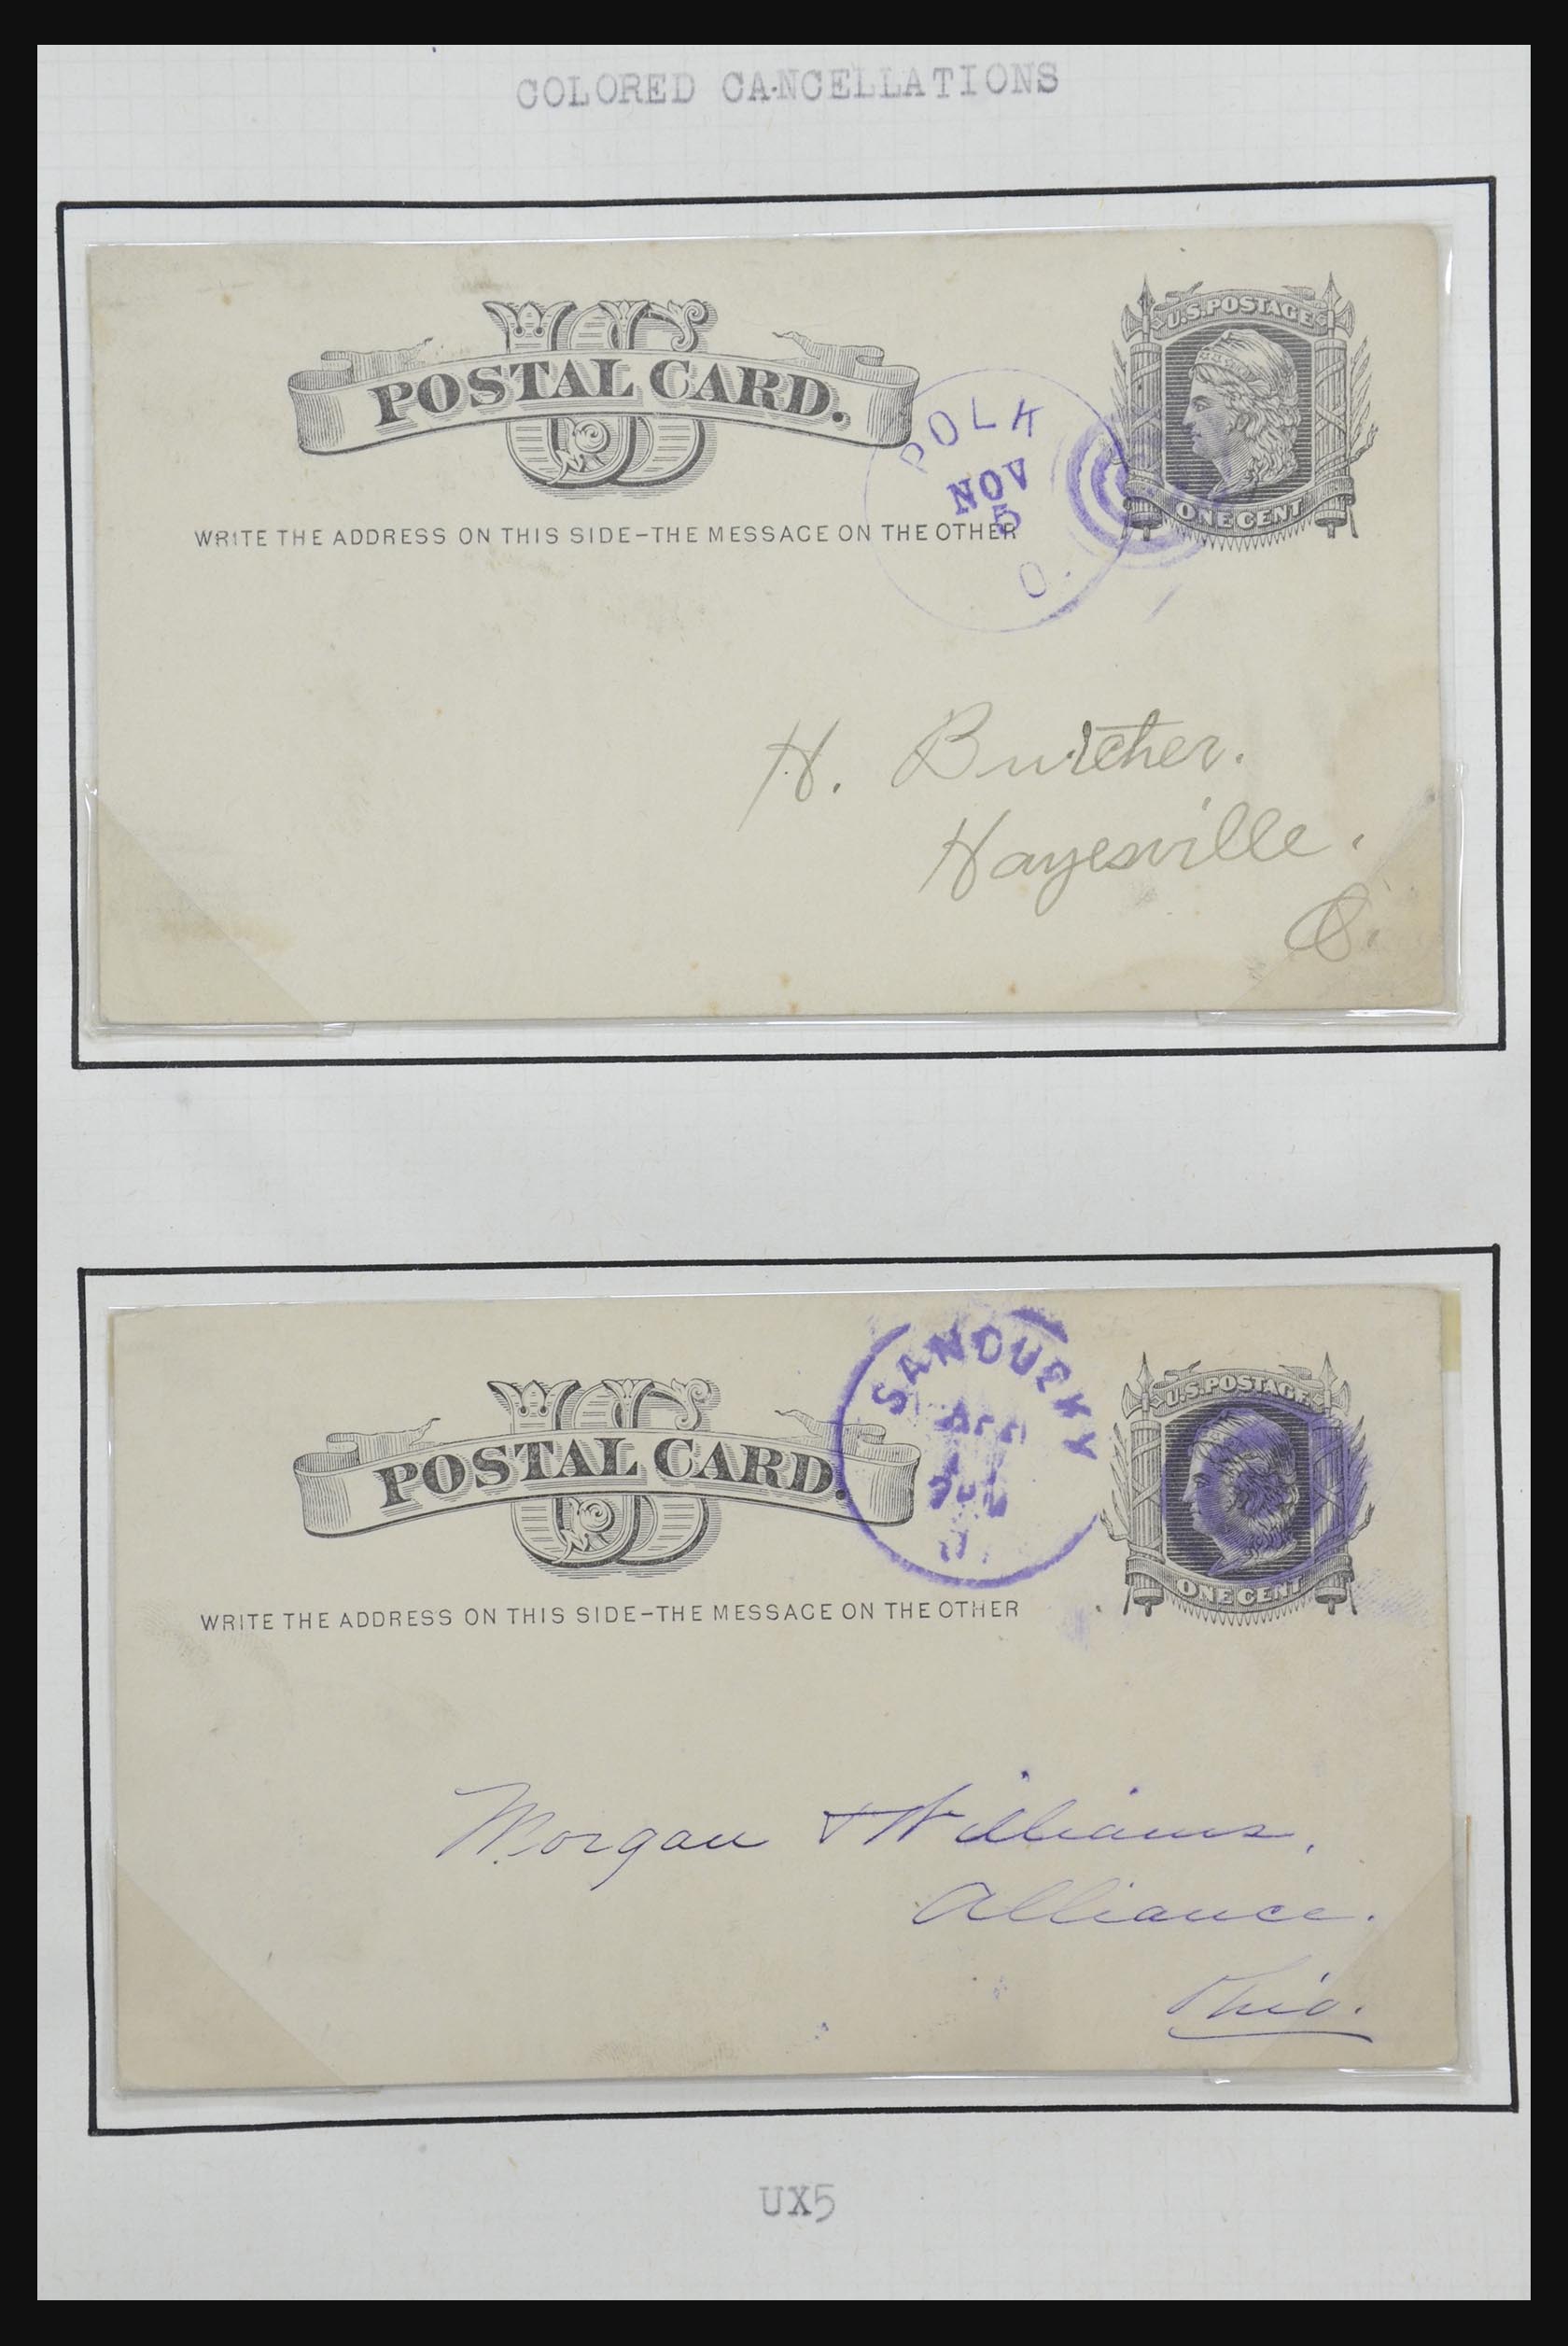 32209 025 - 32209 USA postal cards 1873-1950.